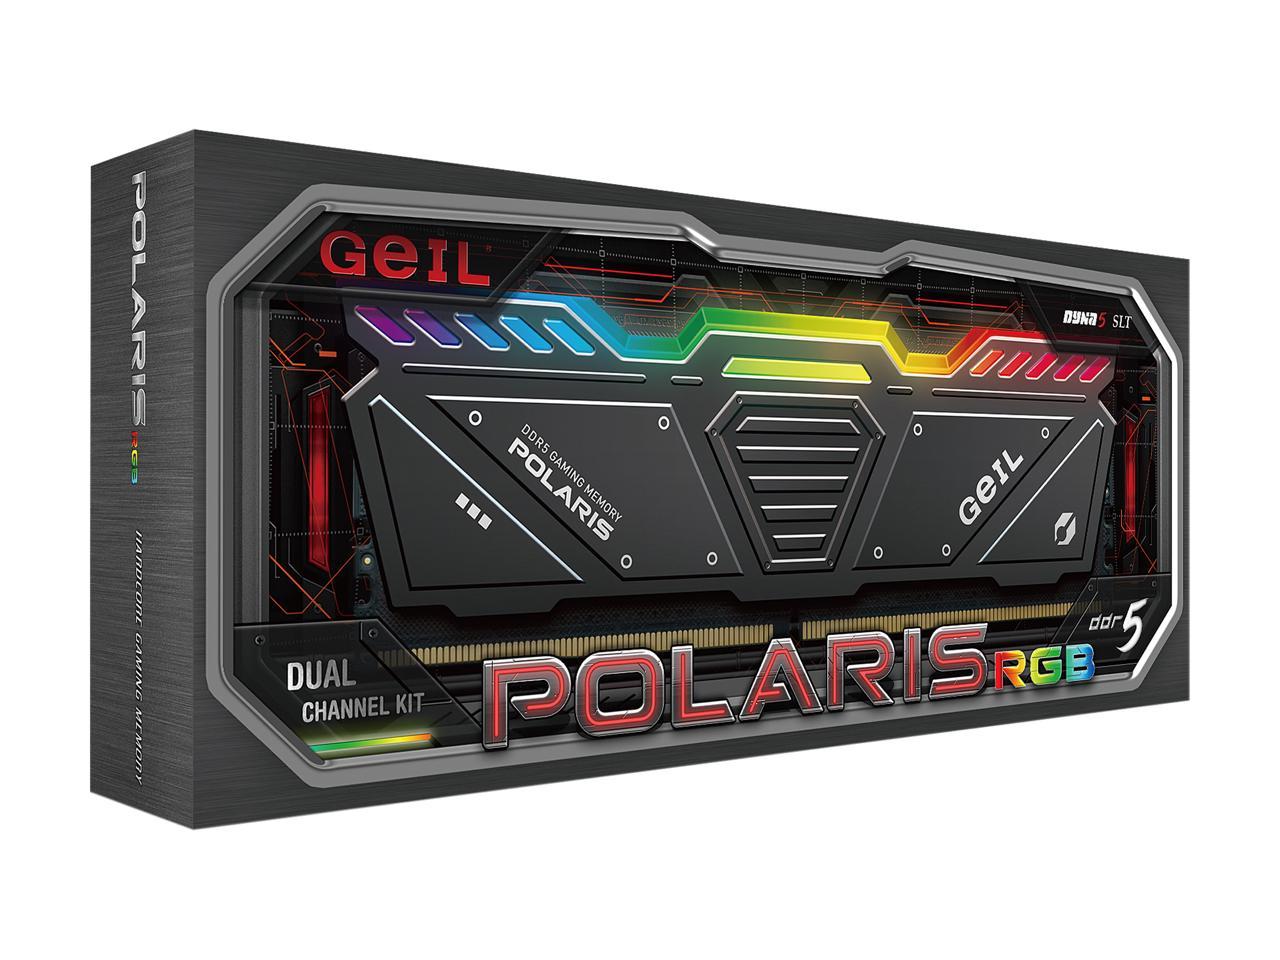 Polaris DDR5, GamersRD